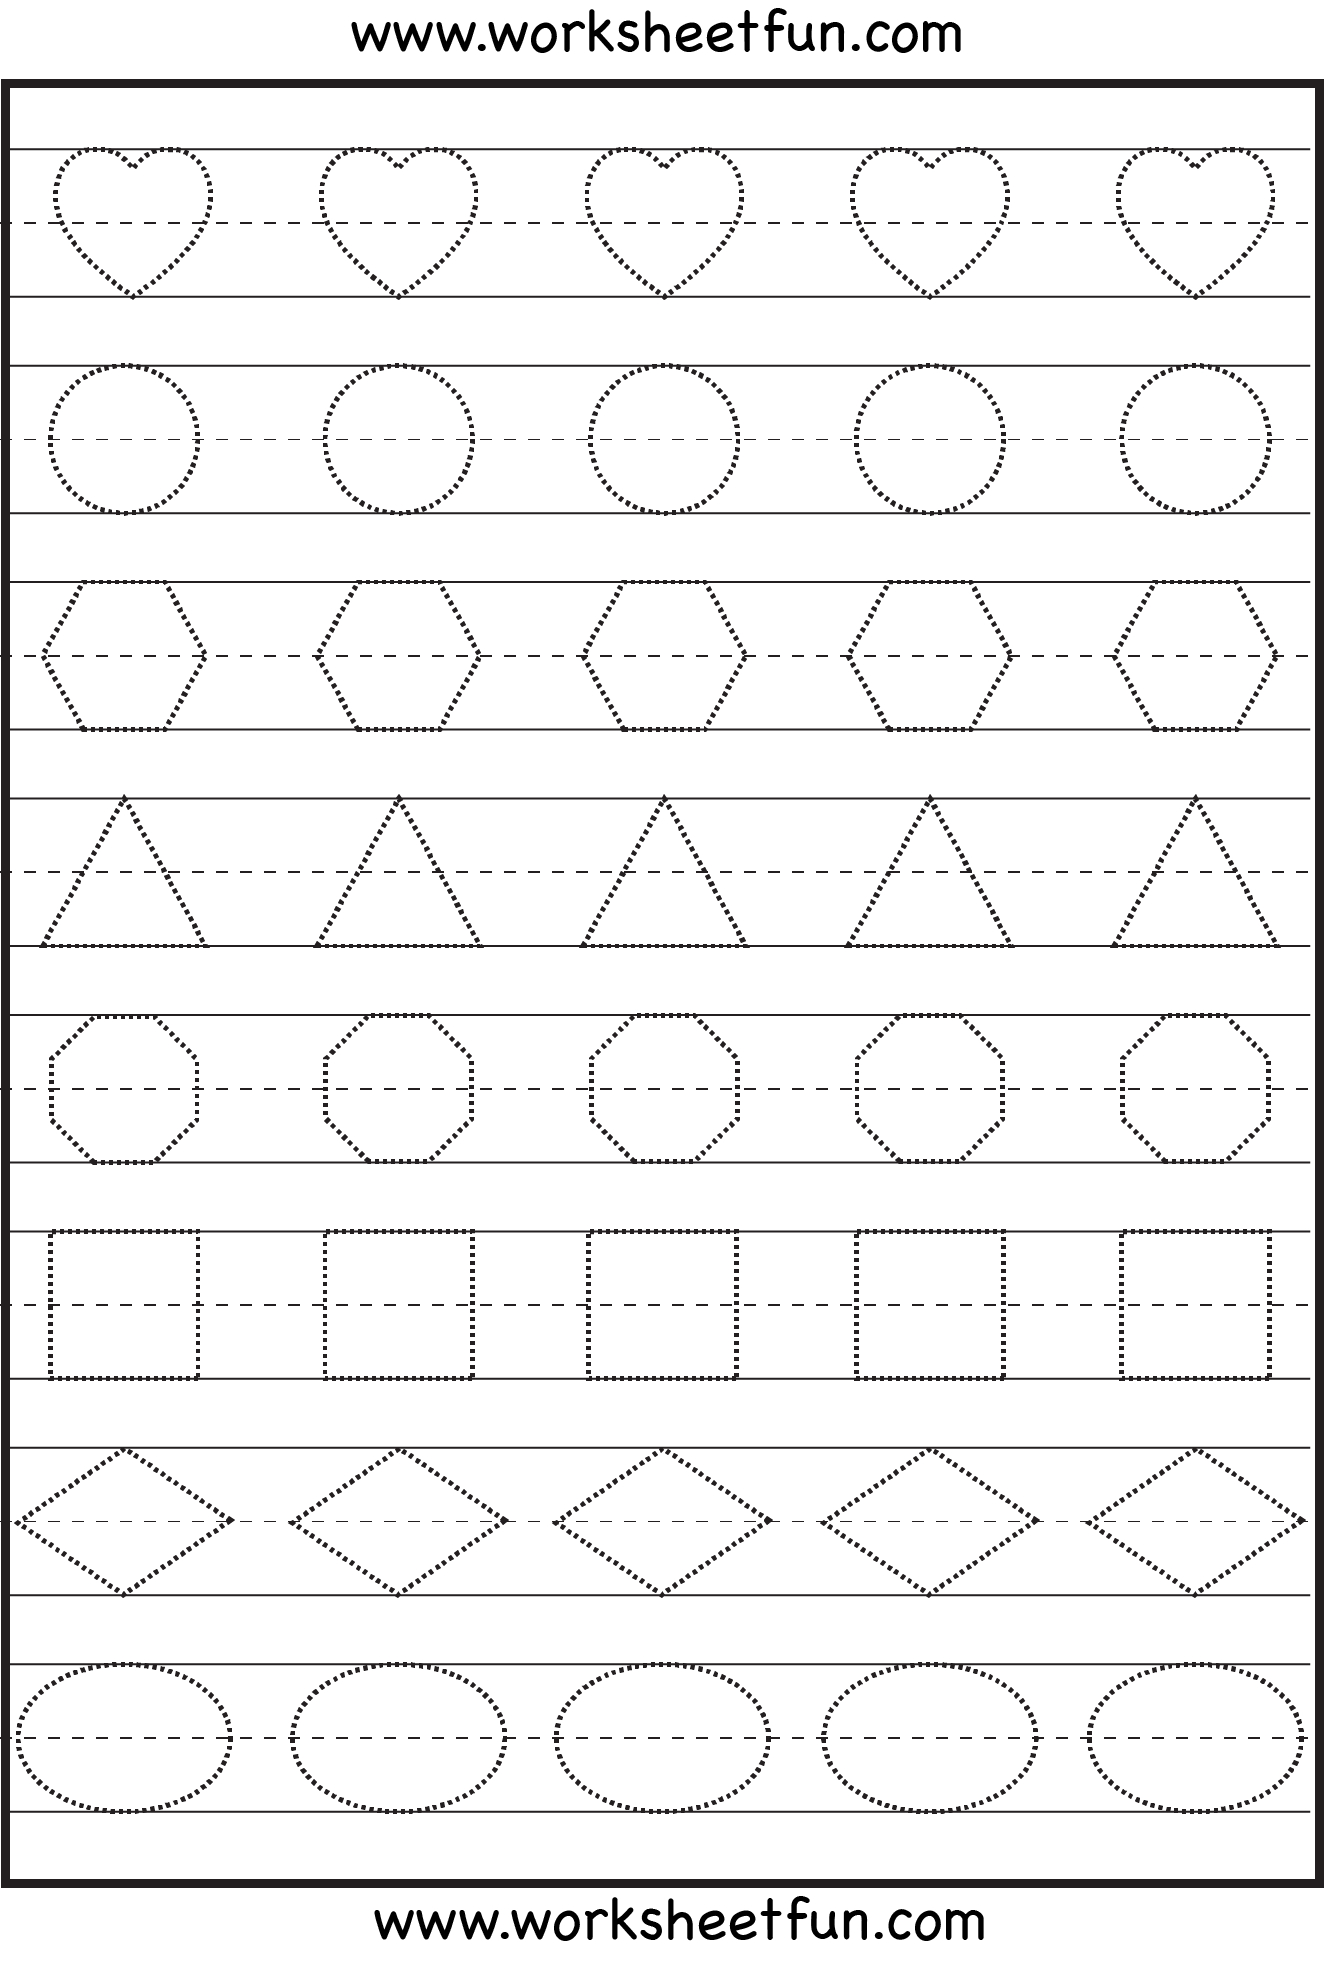 4 Pattern Writing Worksheets For Preschool - Share Worksheets